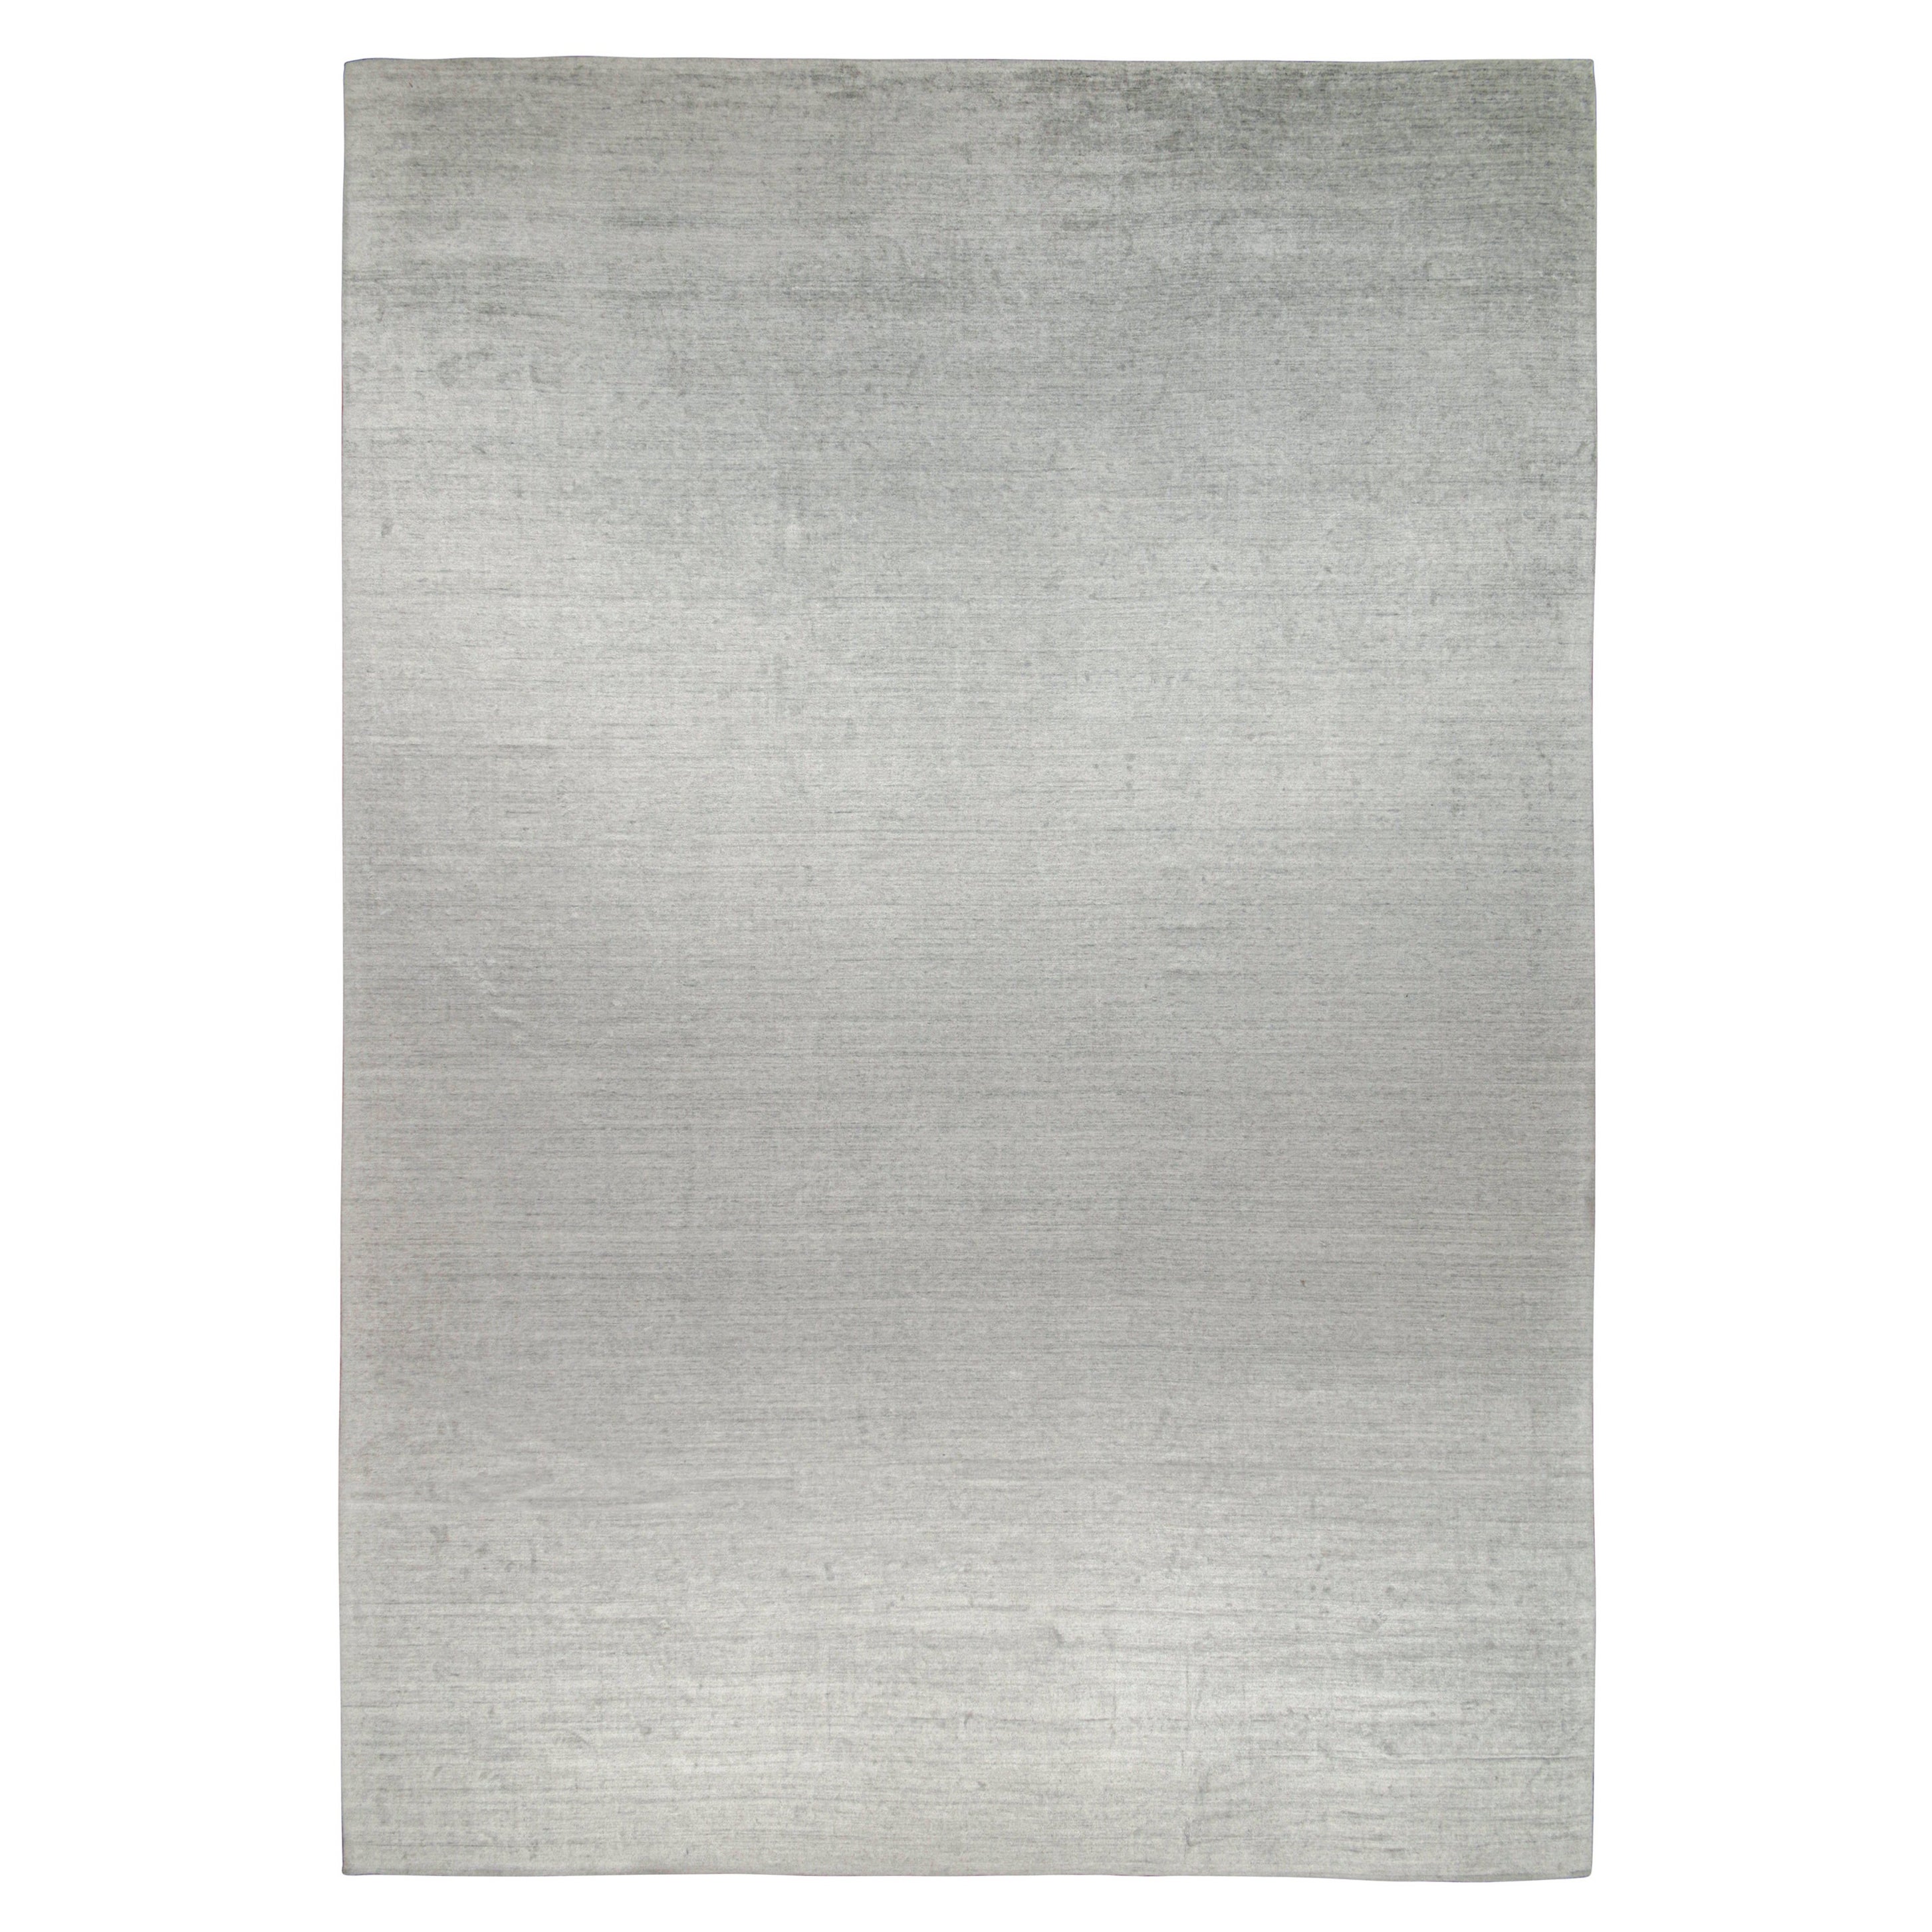 Rug & Kilim's Modern Teppich in Grau und Off-White Striae